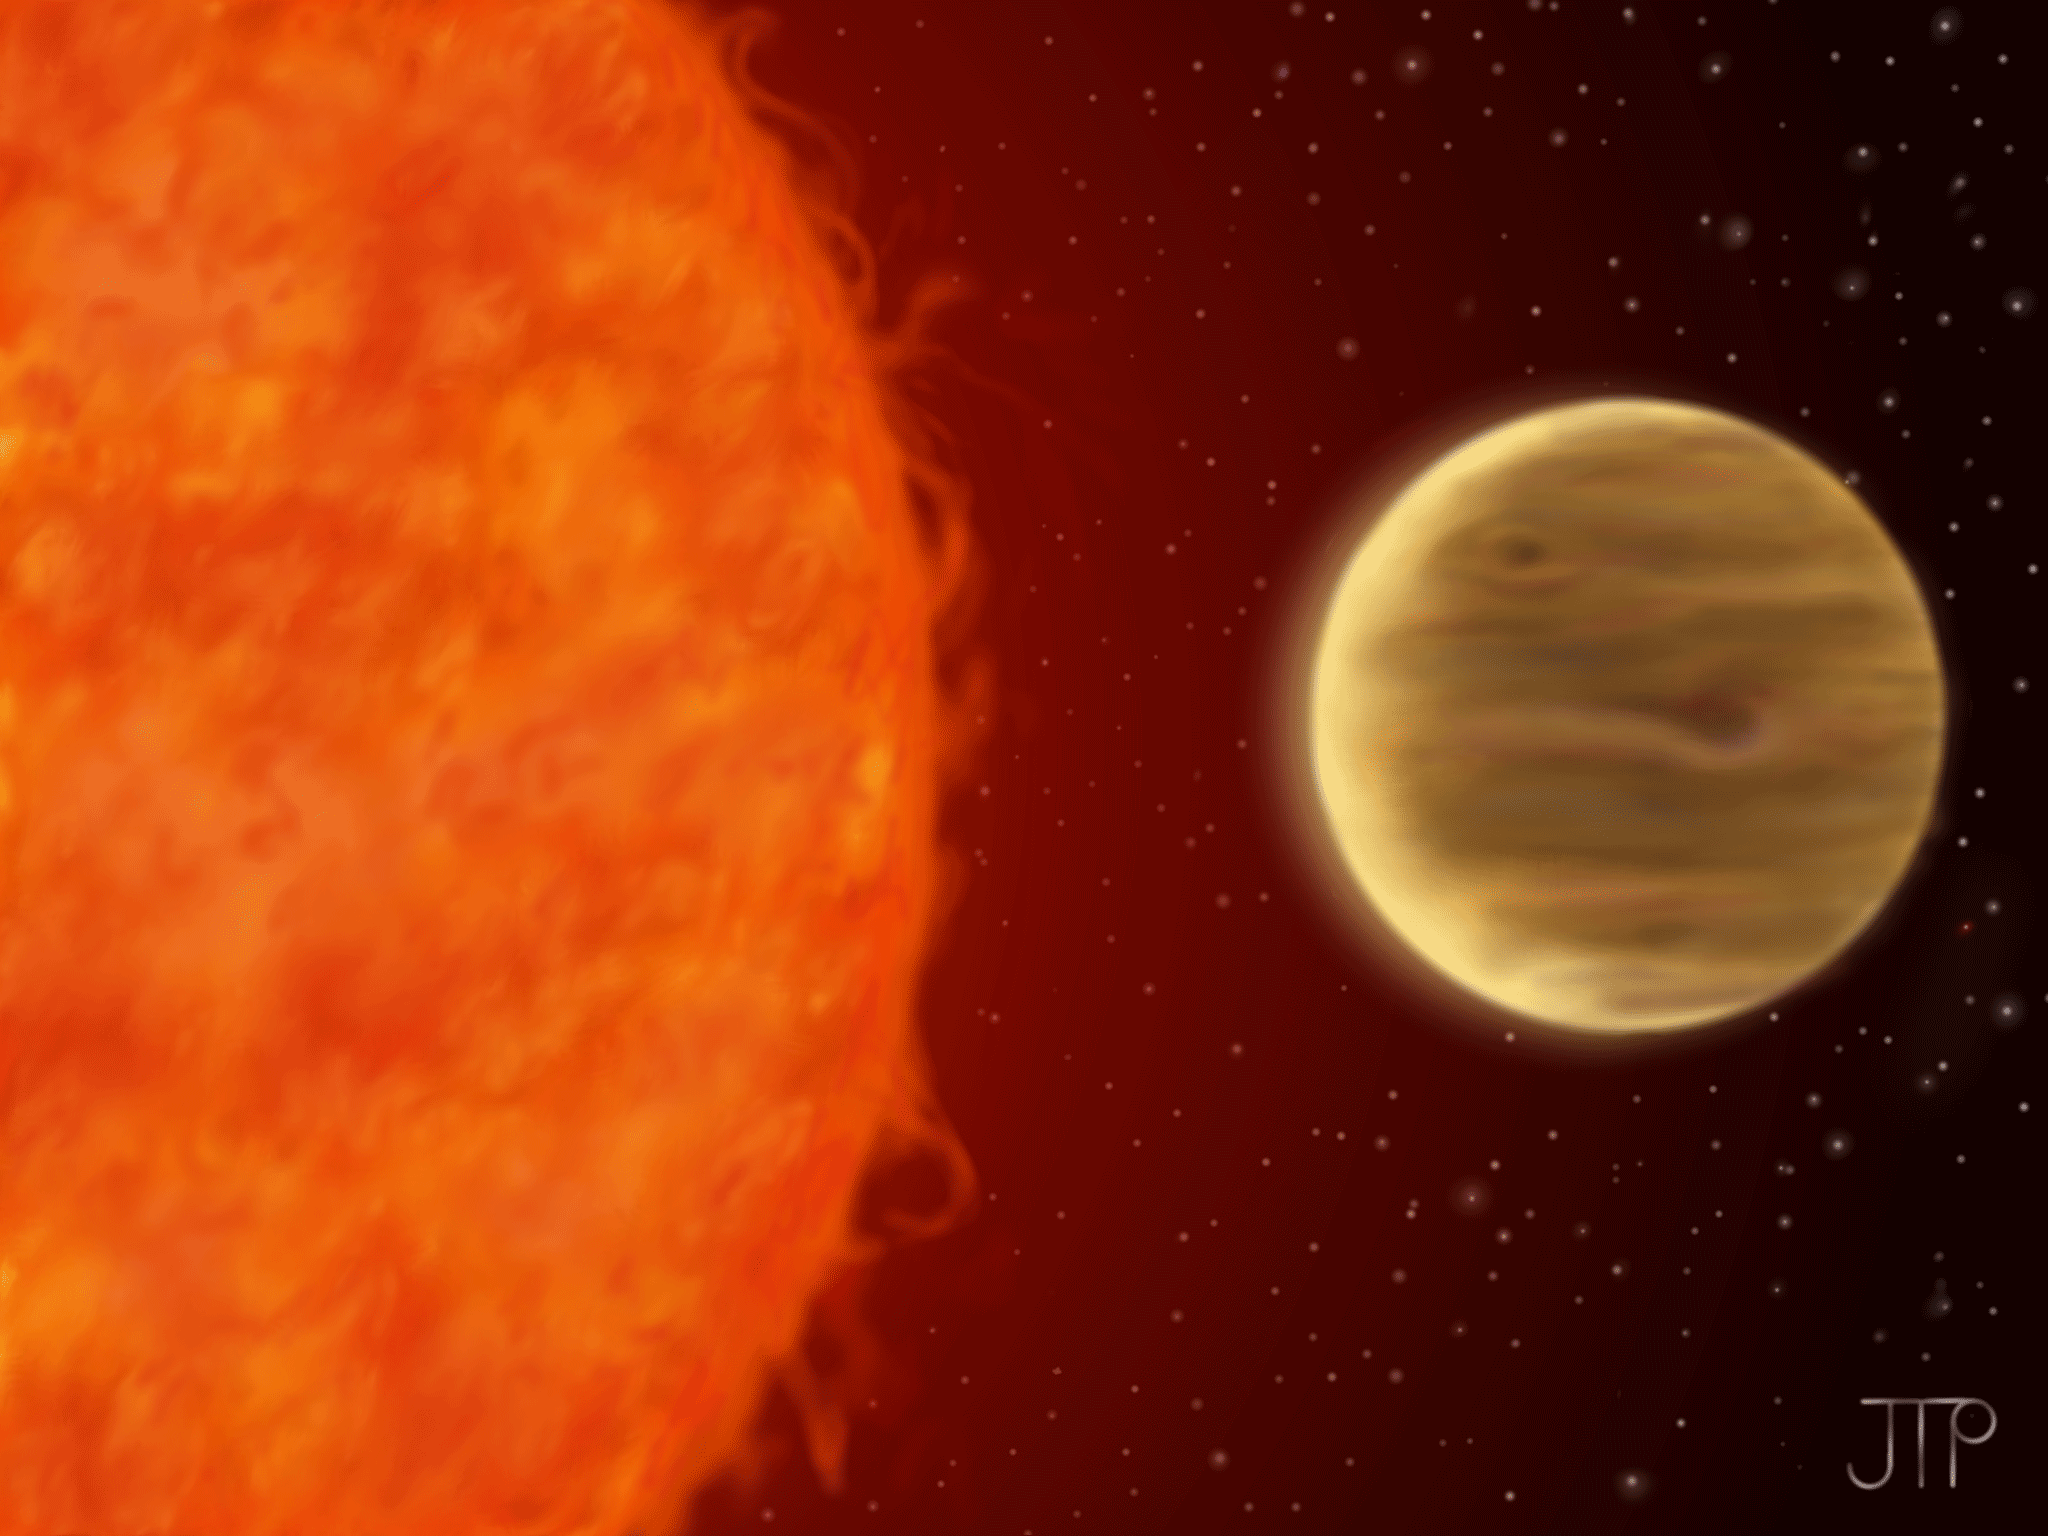 Extra solar planet WTS-2b